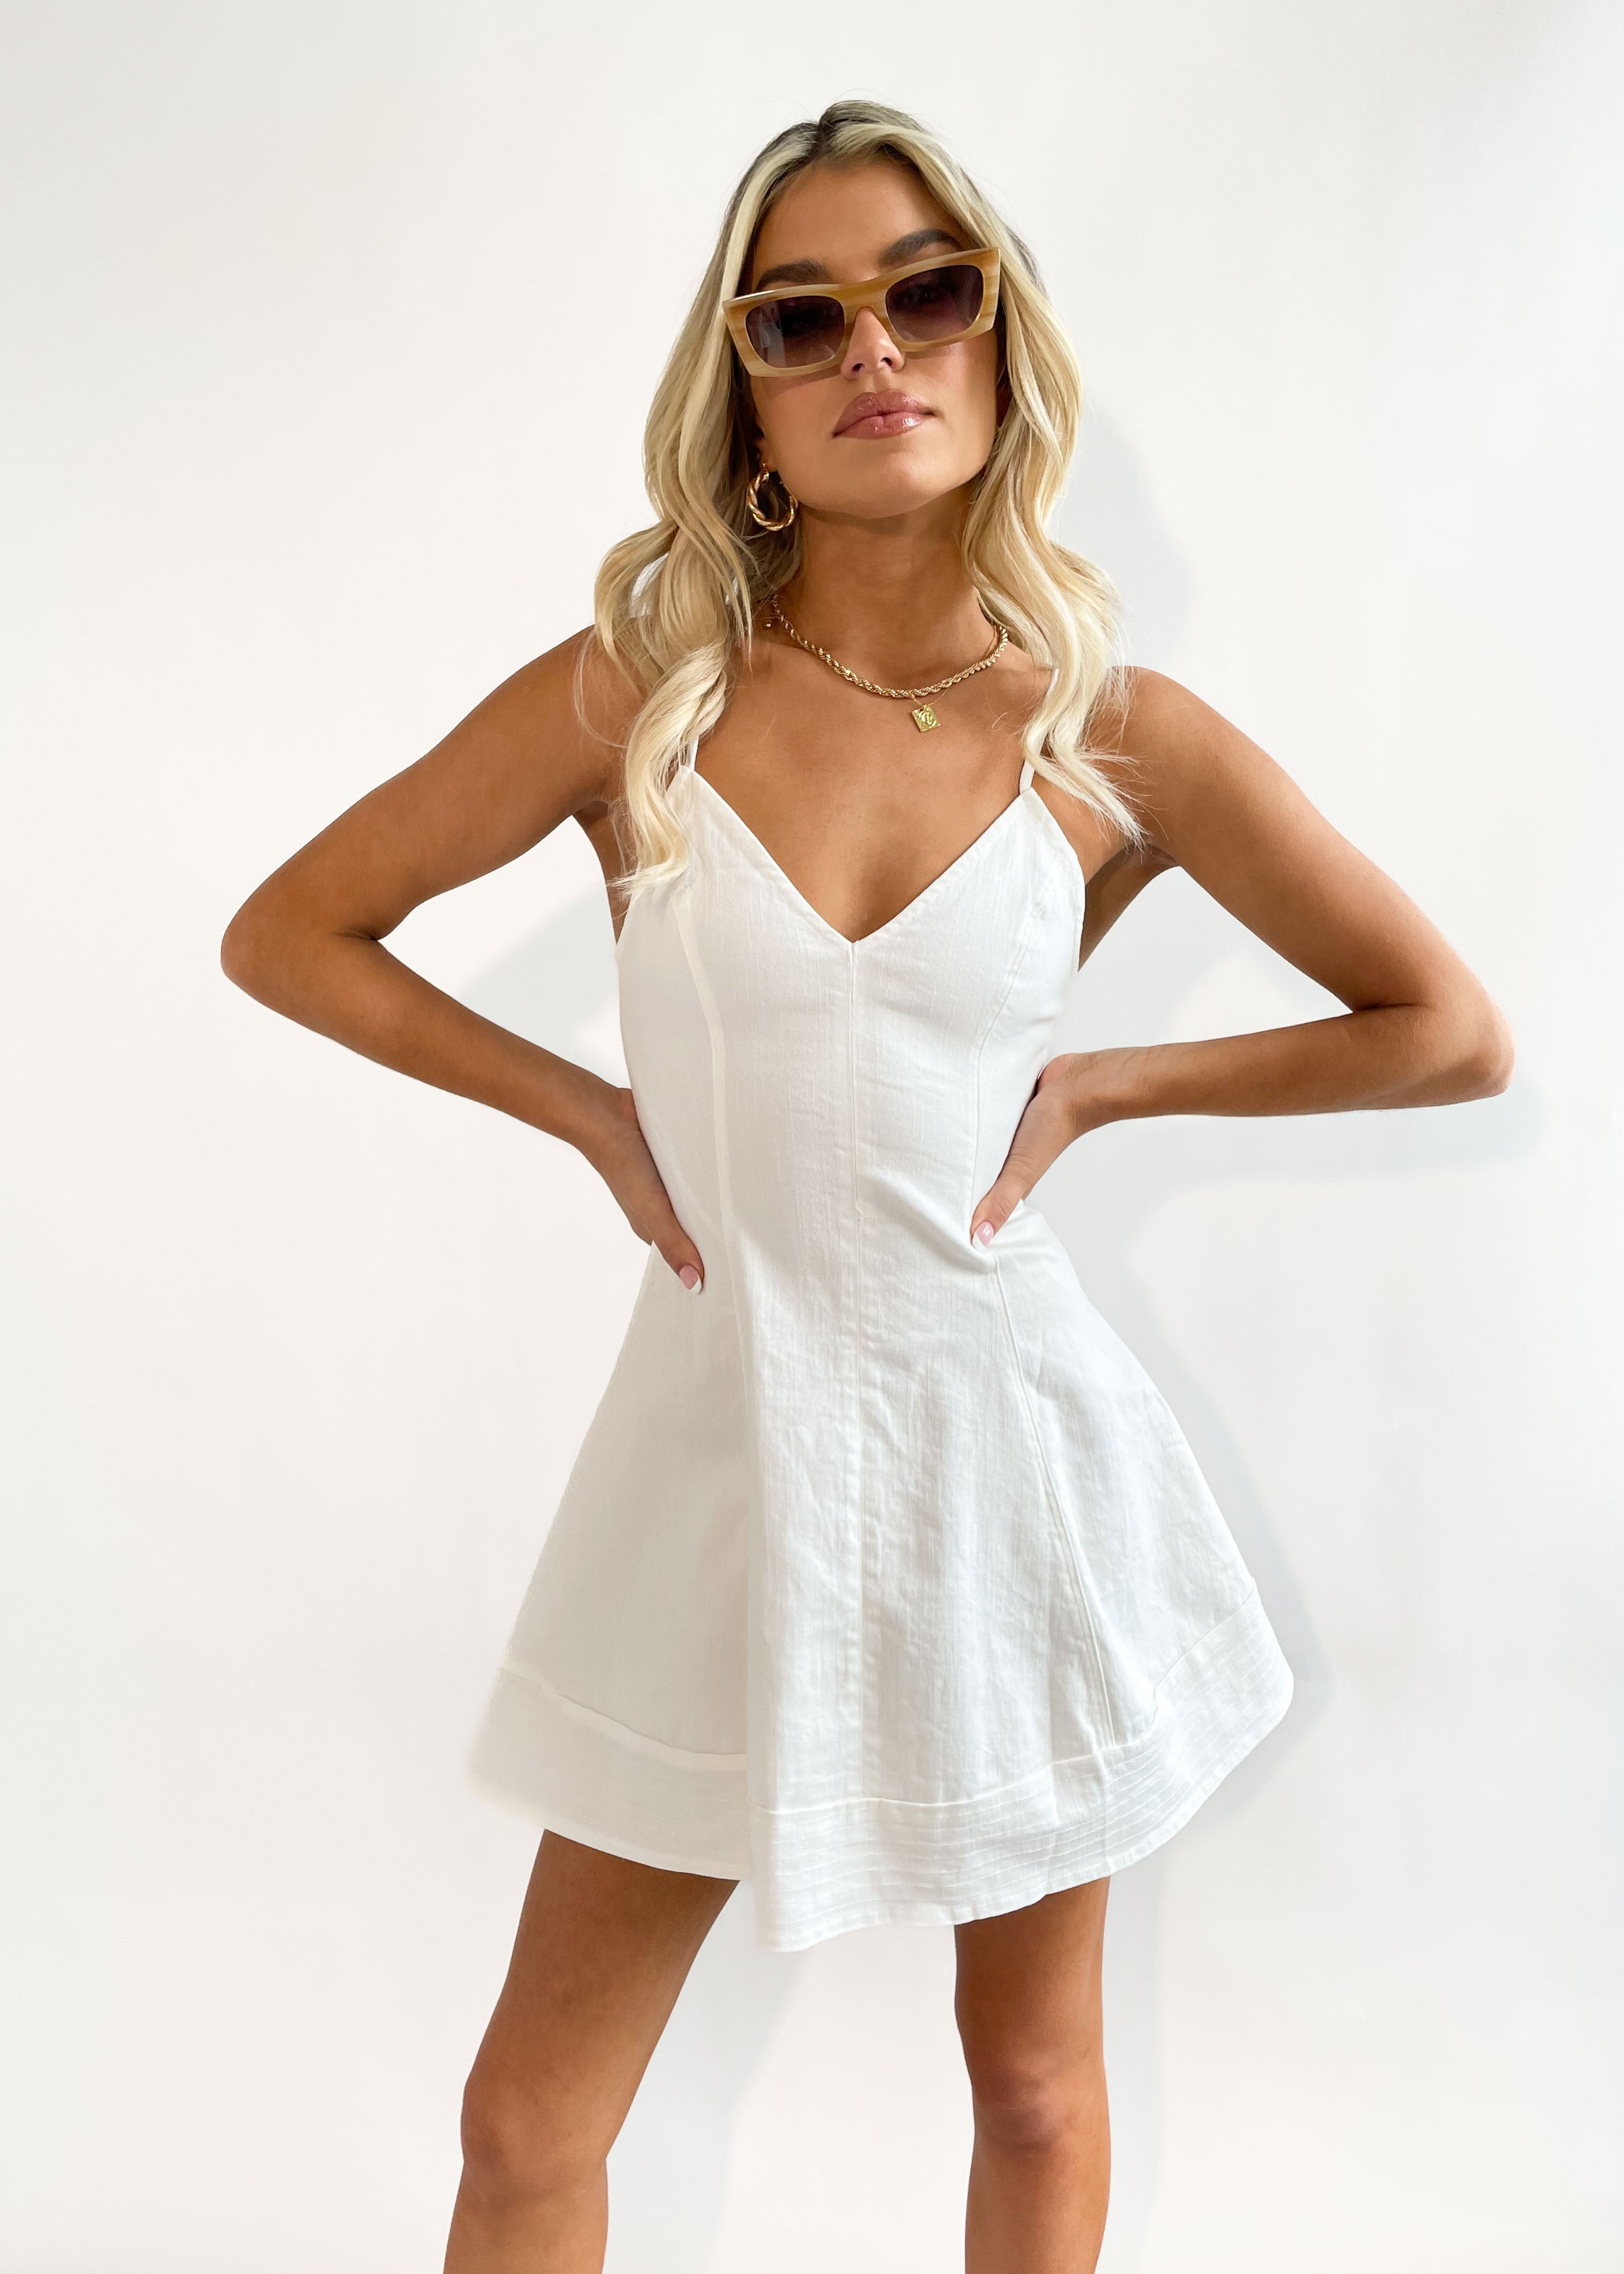 Luellah Dress - White Denim